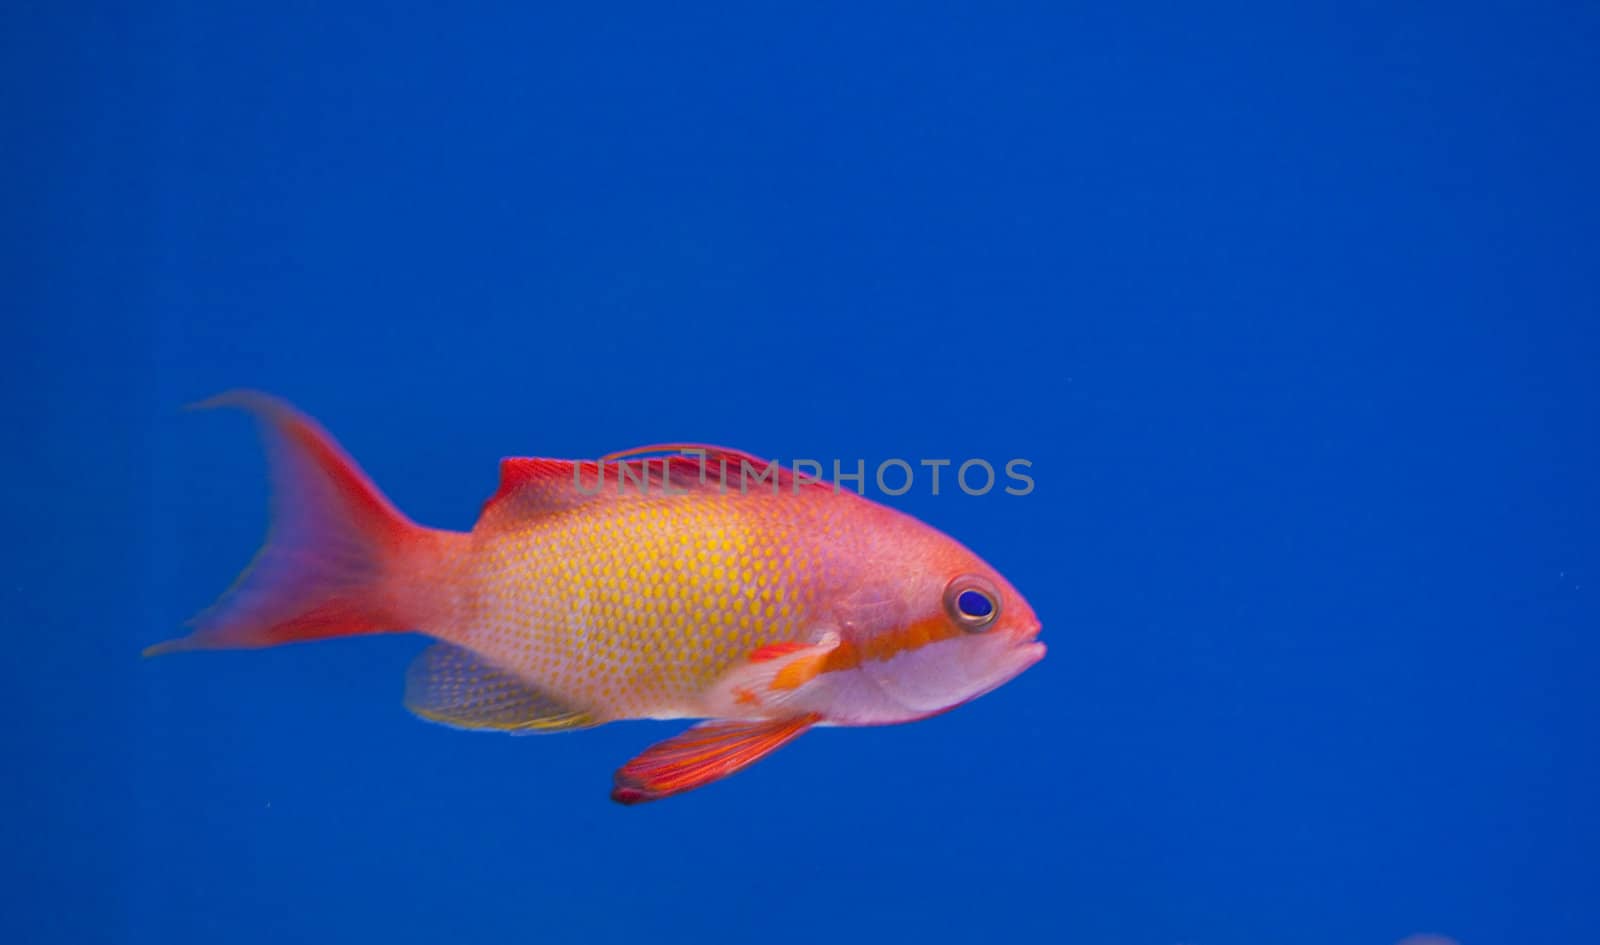 marine aquarium fish tank by Trebuchet